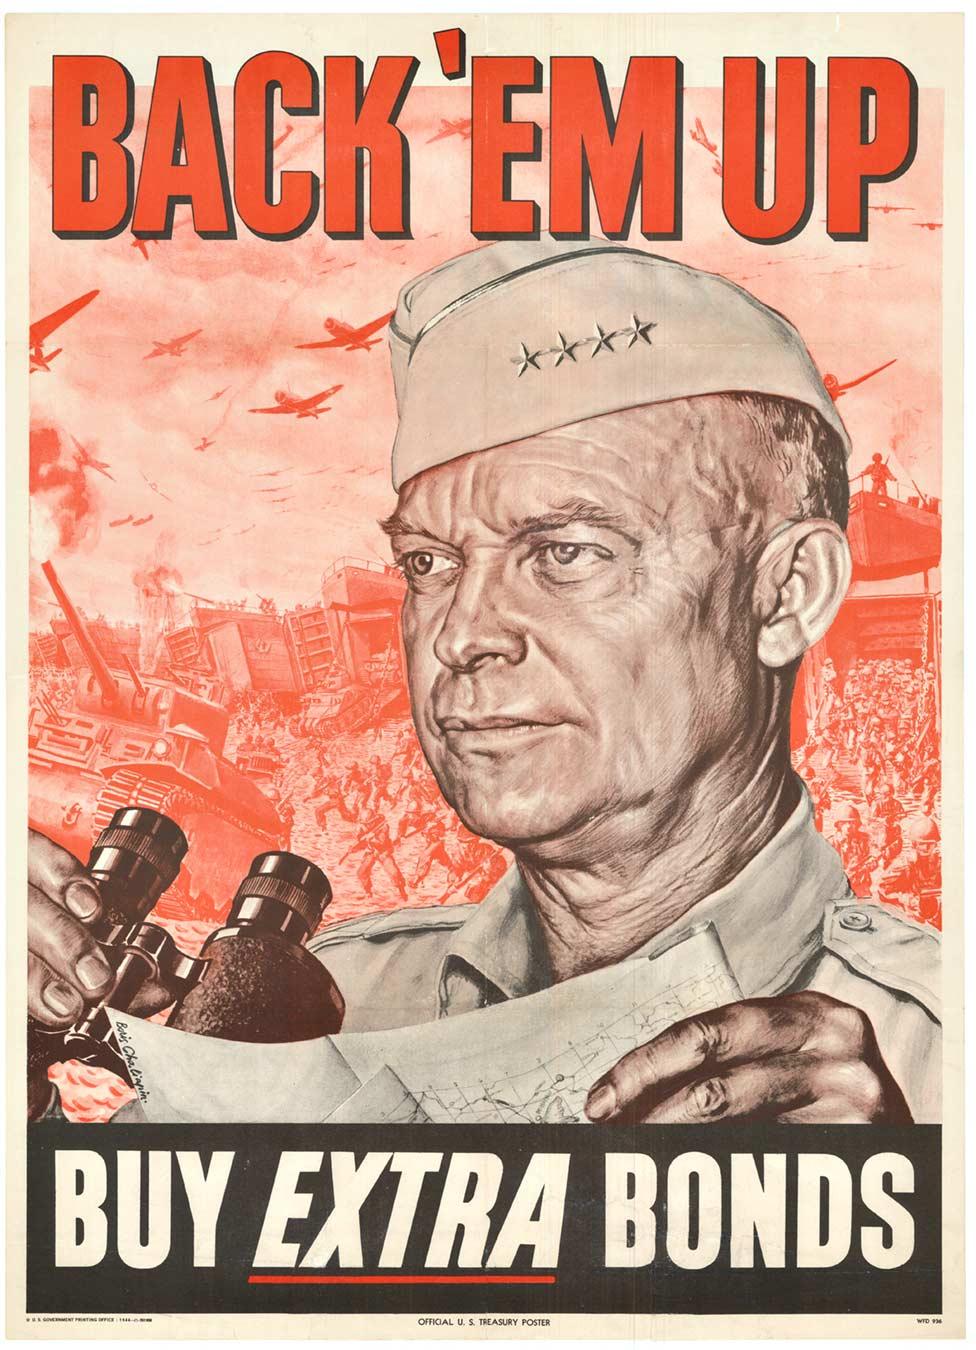 Boris Chaliapin Portrait Print - Original 1944 "Back 'Em Up Buy Extra Bonds" Eisenhower vintage poster